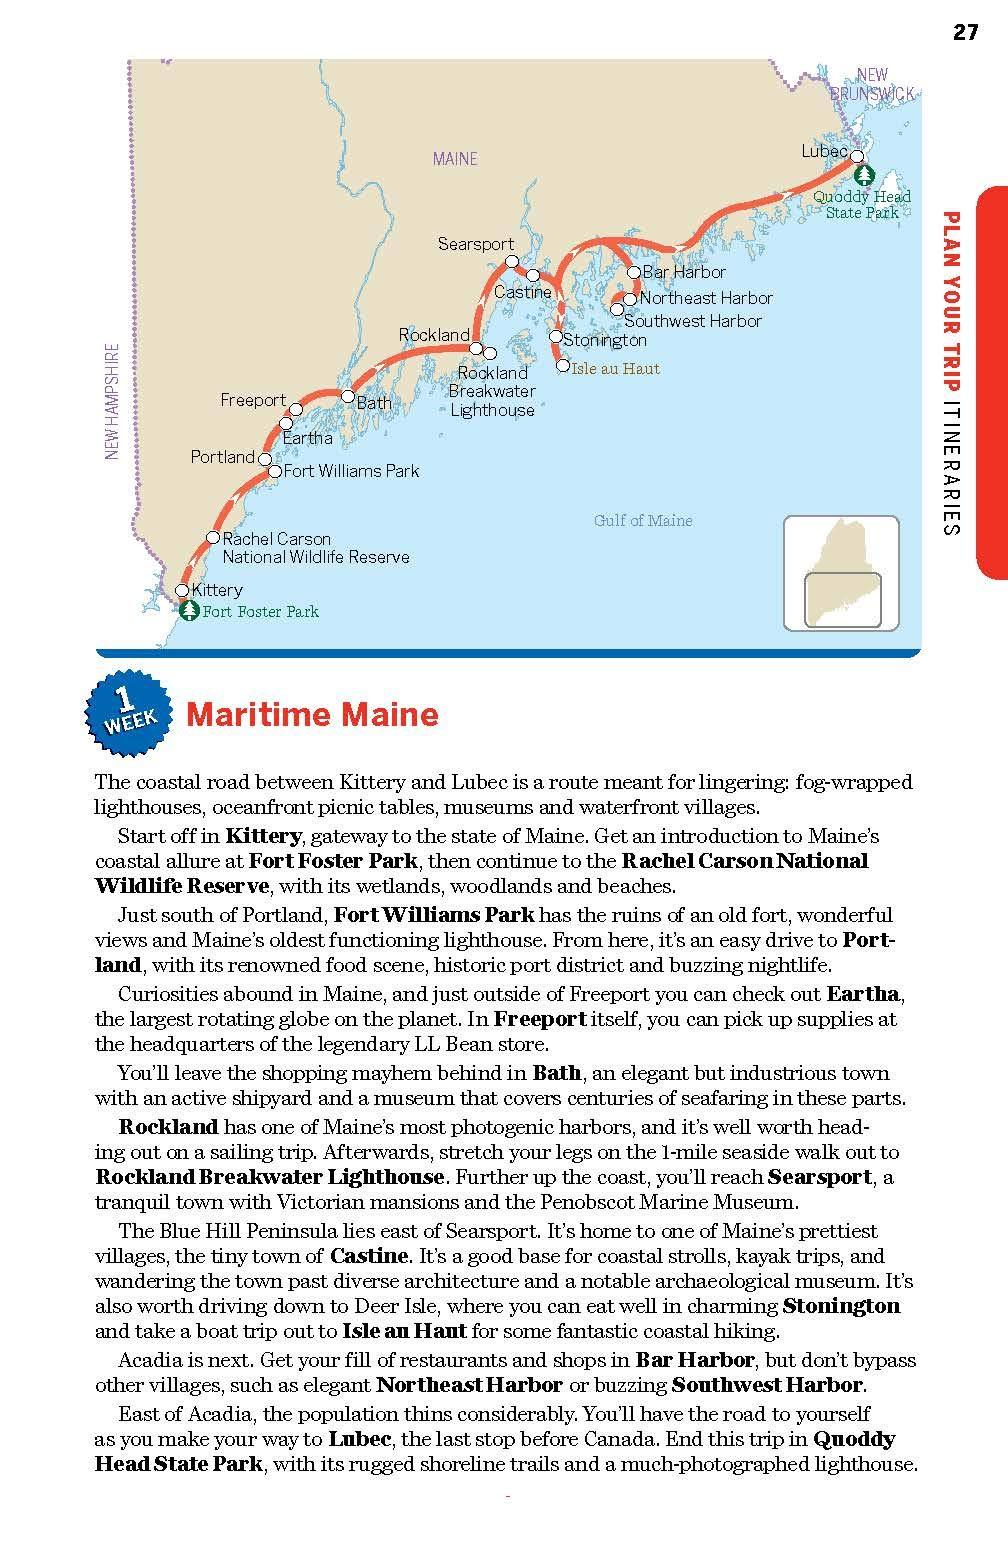 Guide de voyage (en anglais) - Maine & Acadia National Park | Lonely Planet guide de voyage Lonely Planet 